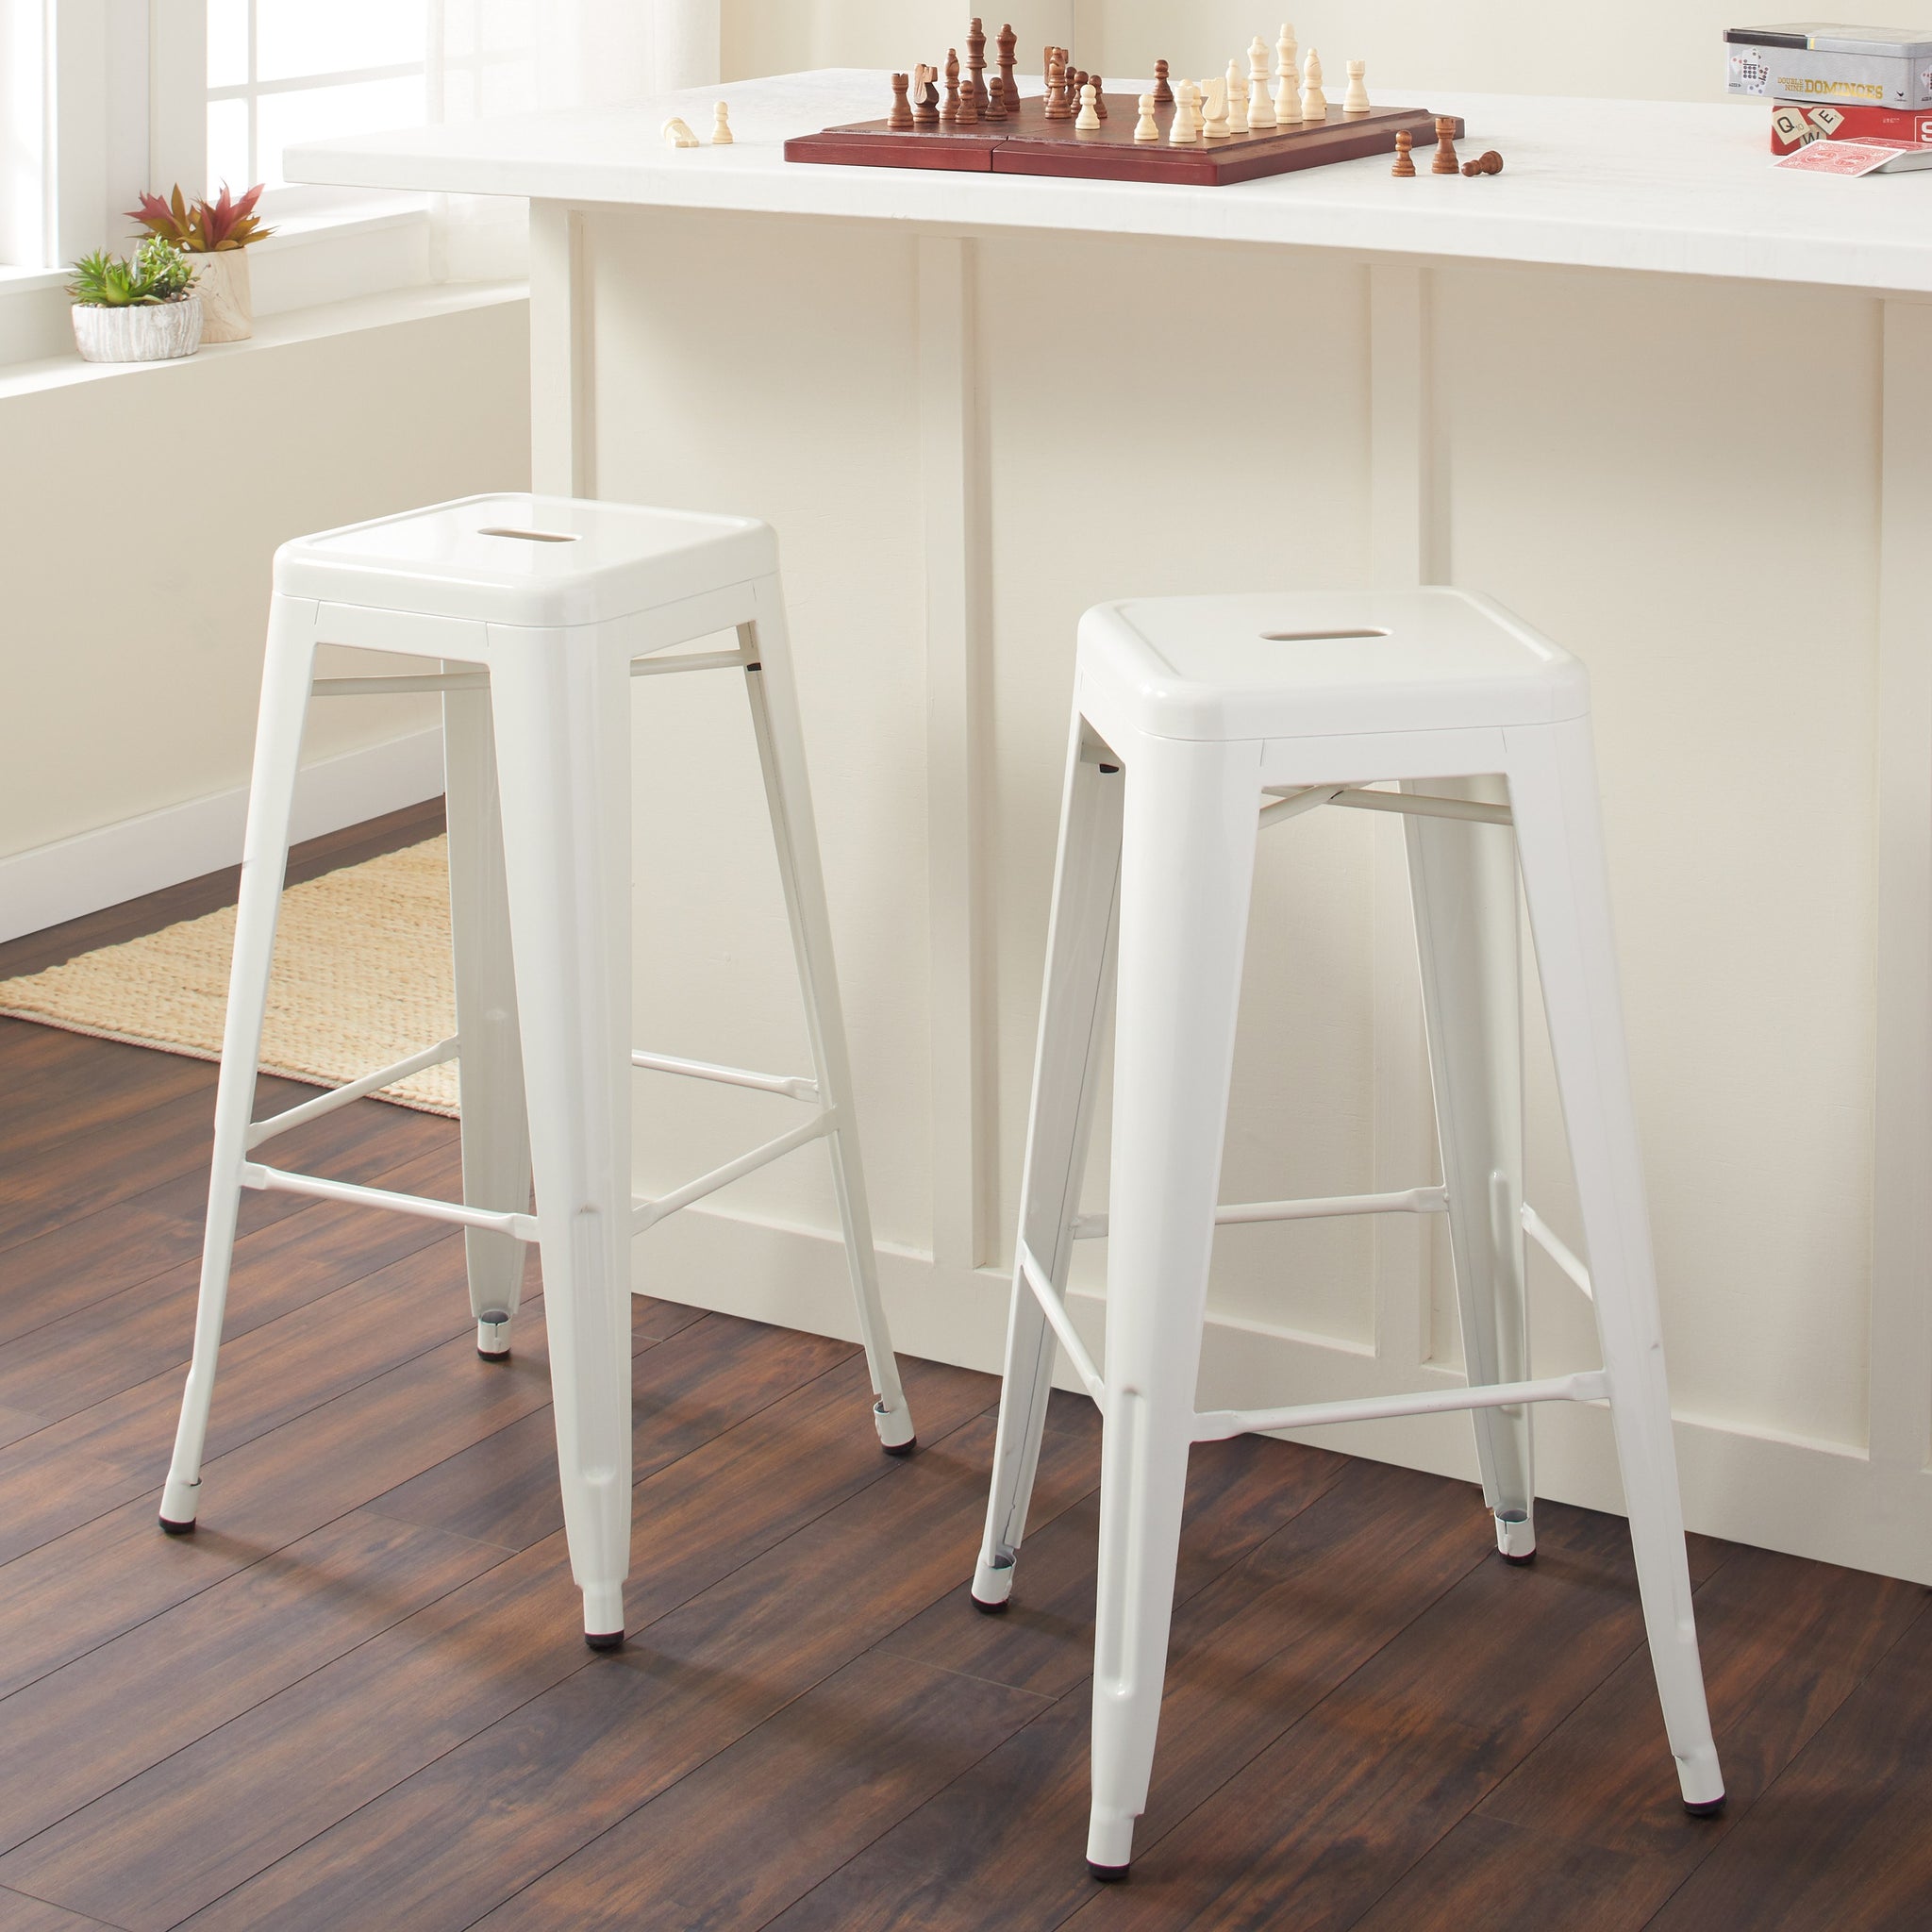 30 inch metal bar stools wooden top